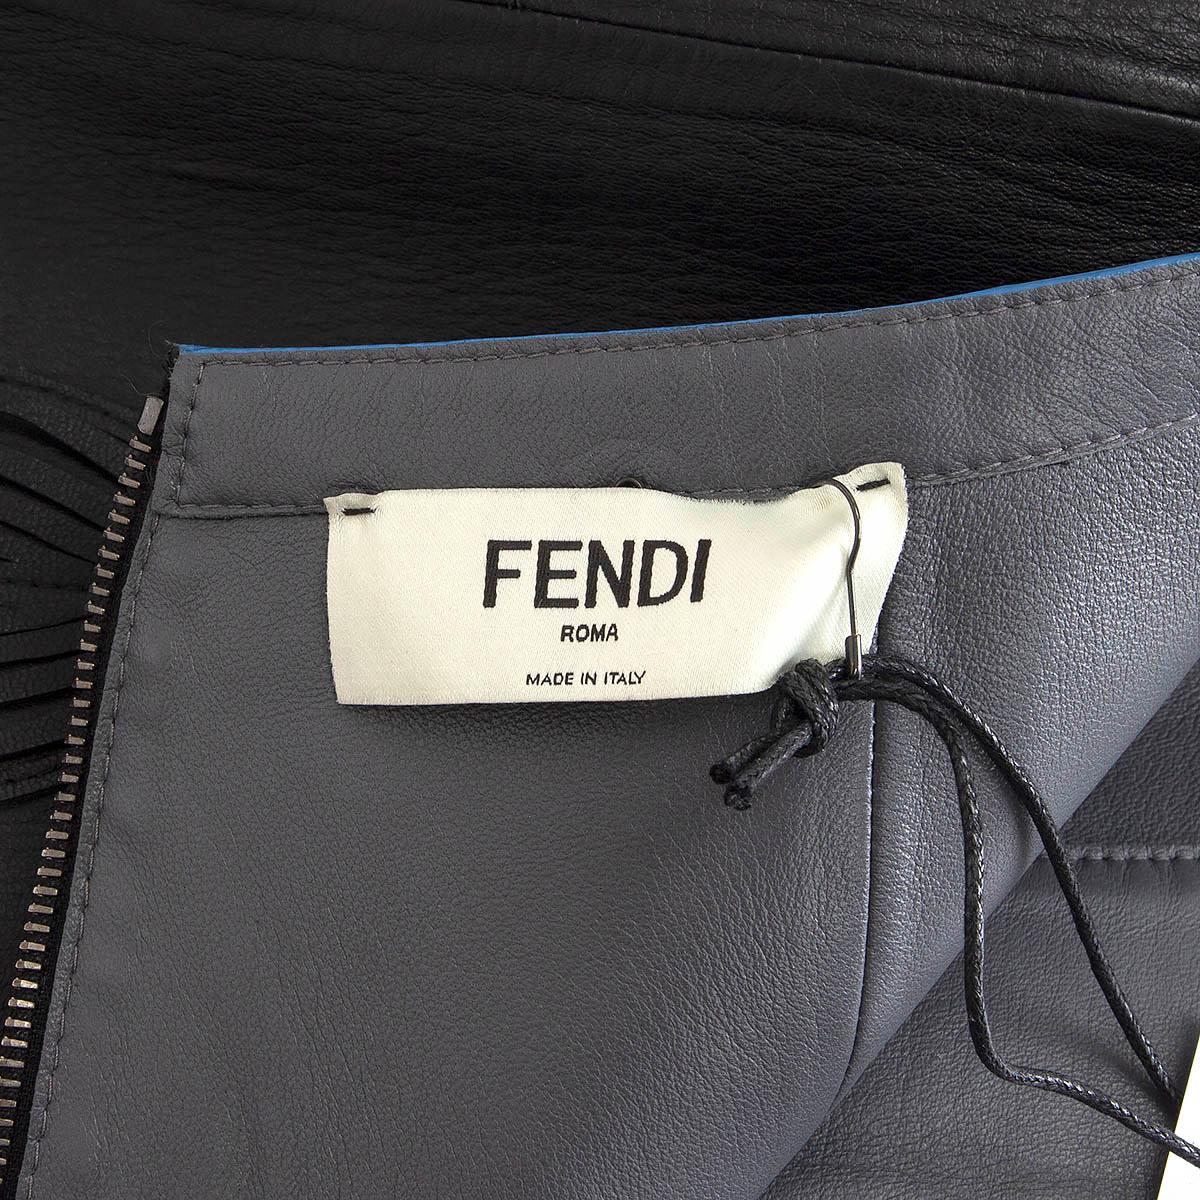 FENDI black leather FLORAL A-LINE Skirt 42 M 3